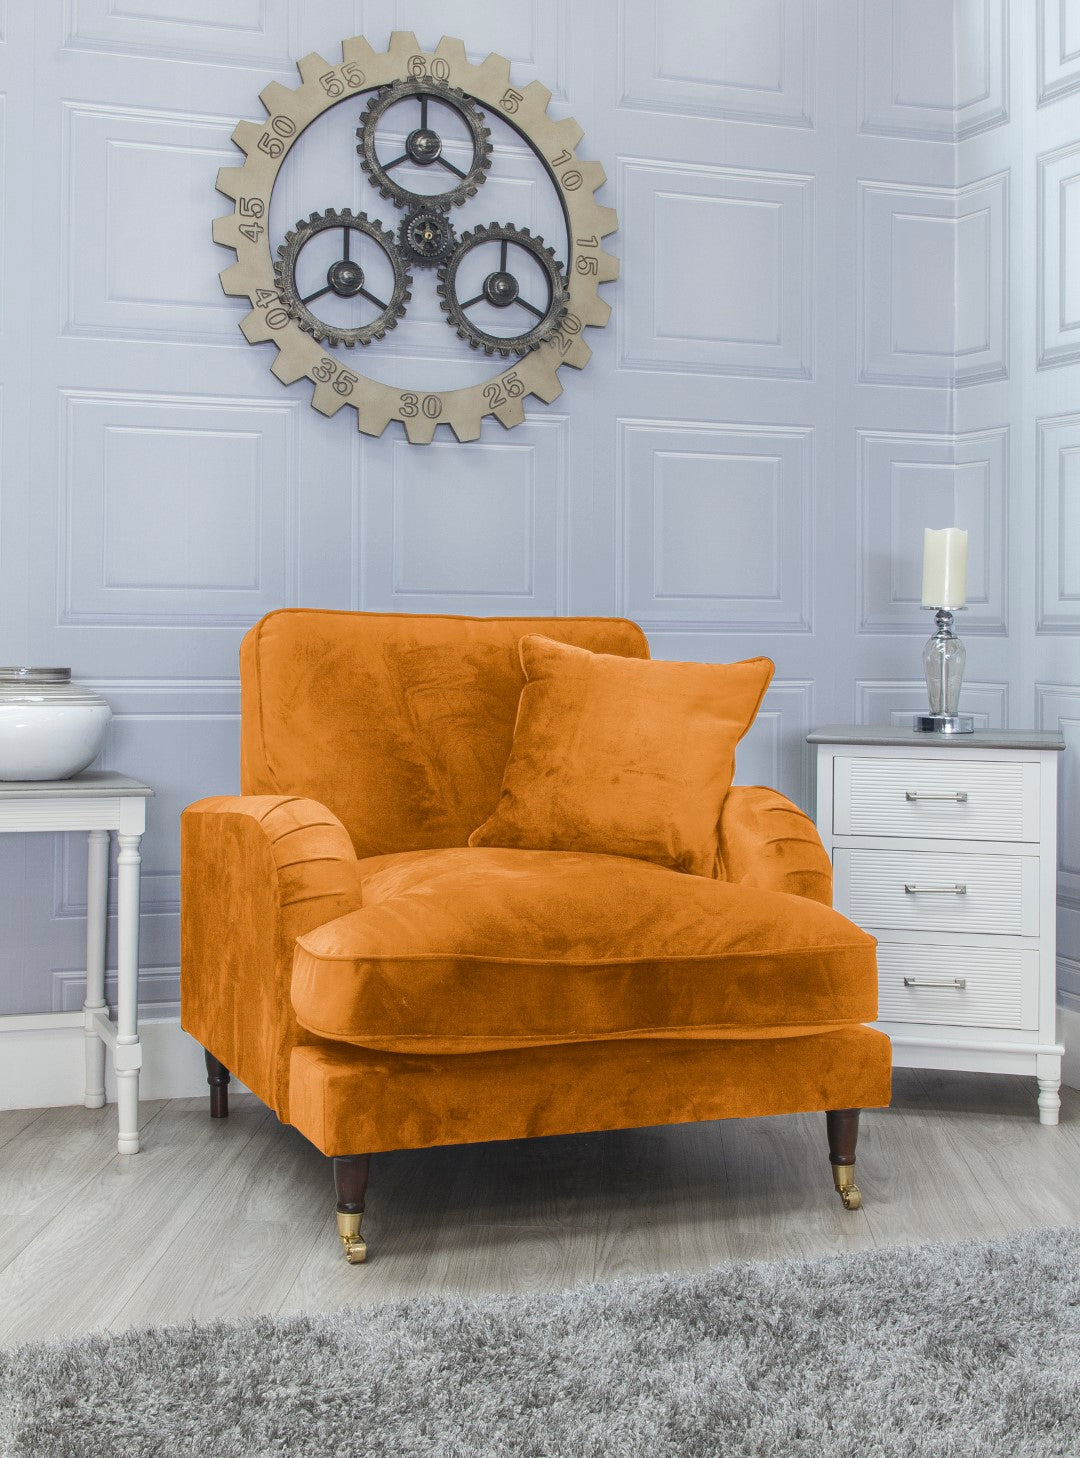 Rupert Fabric Sofa - Orange